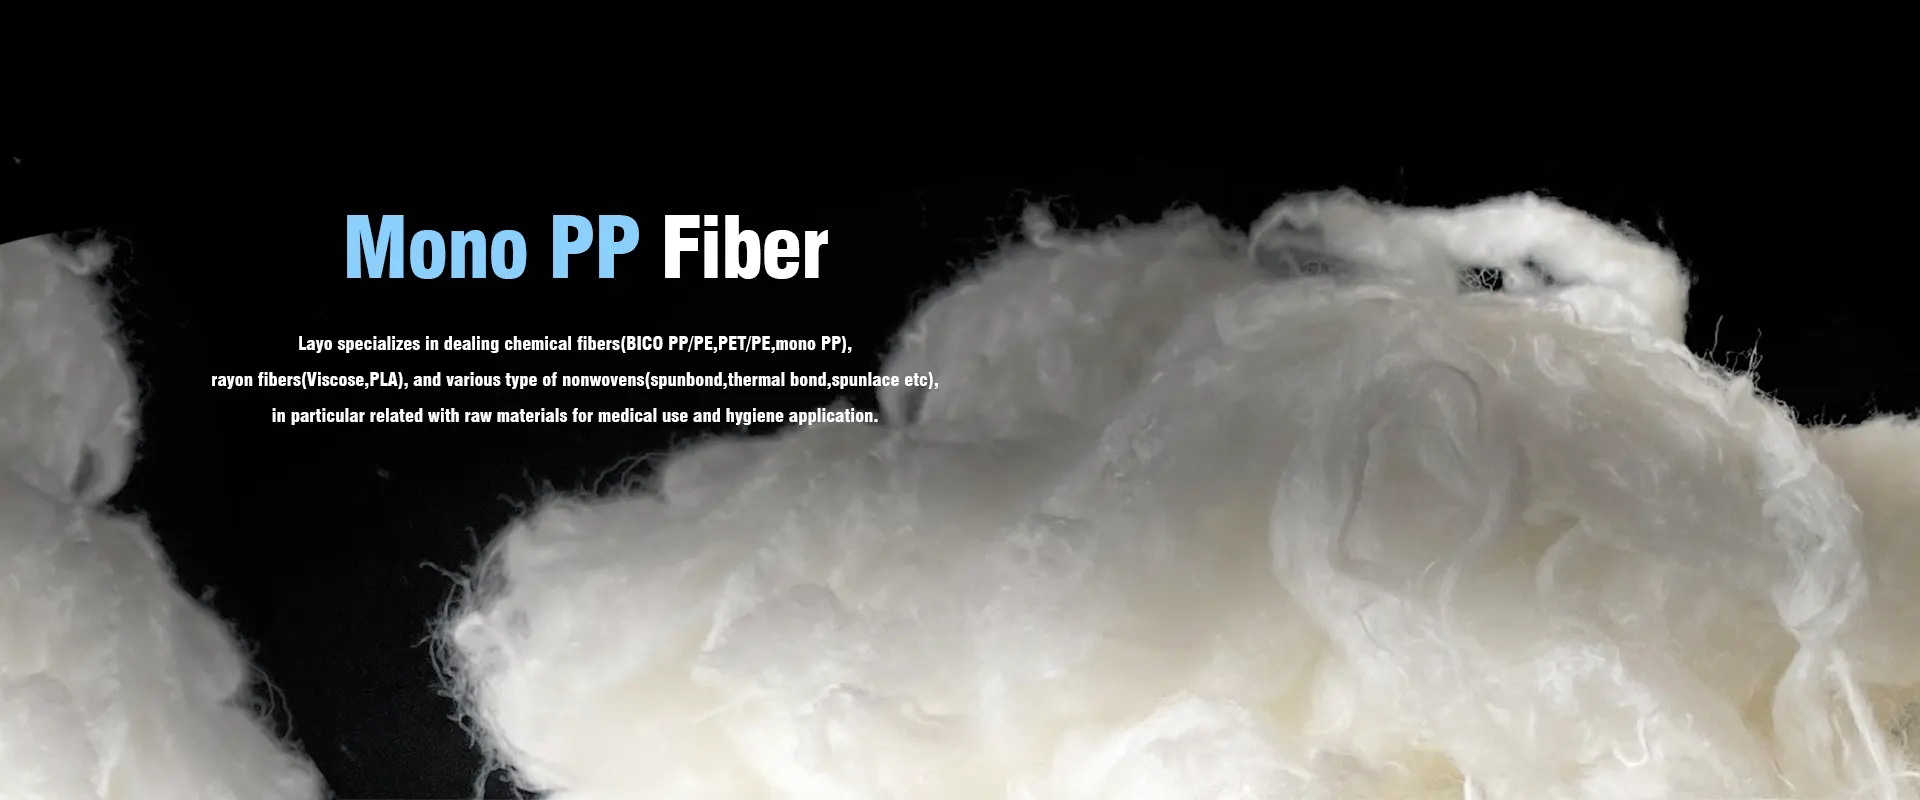 Fornecedores e fabricantes de fibra mono PP